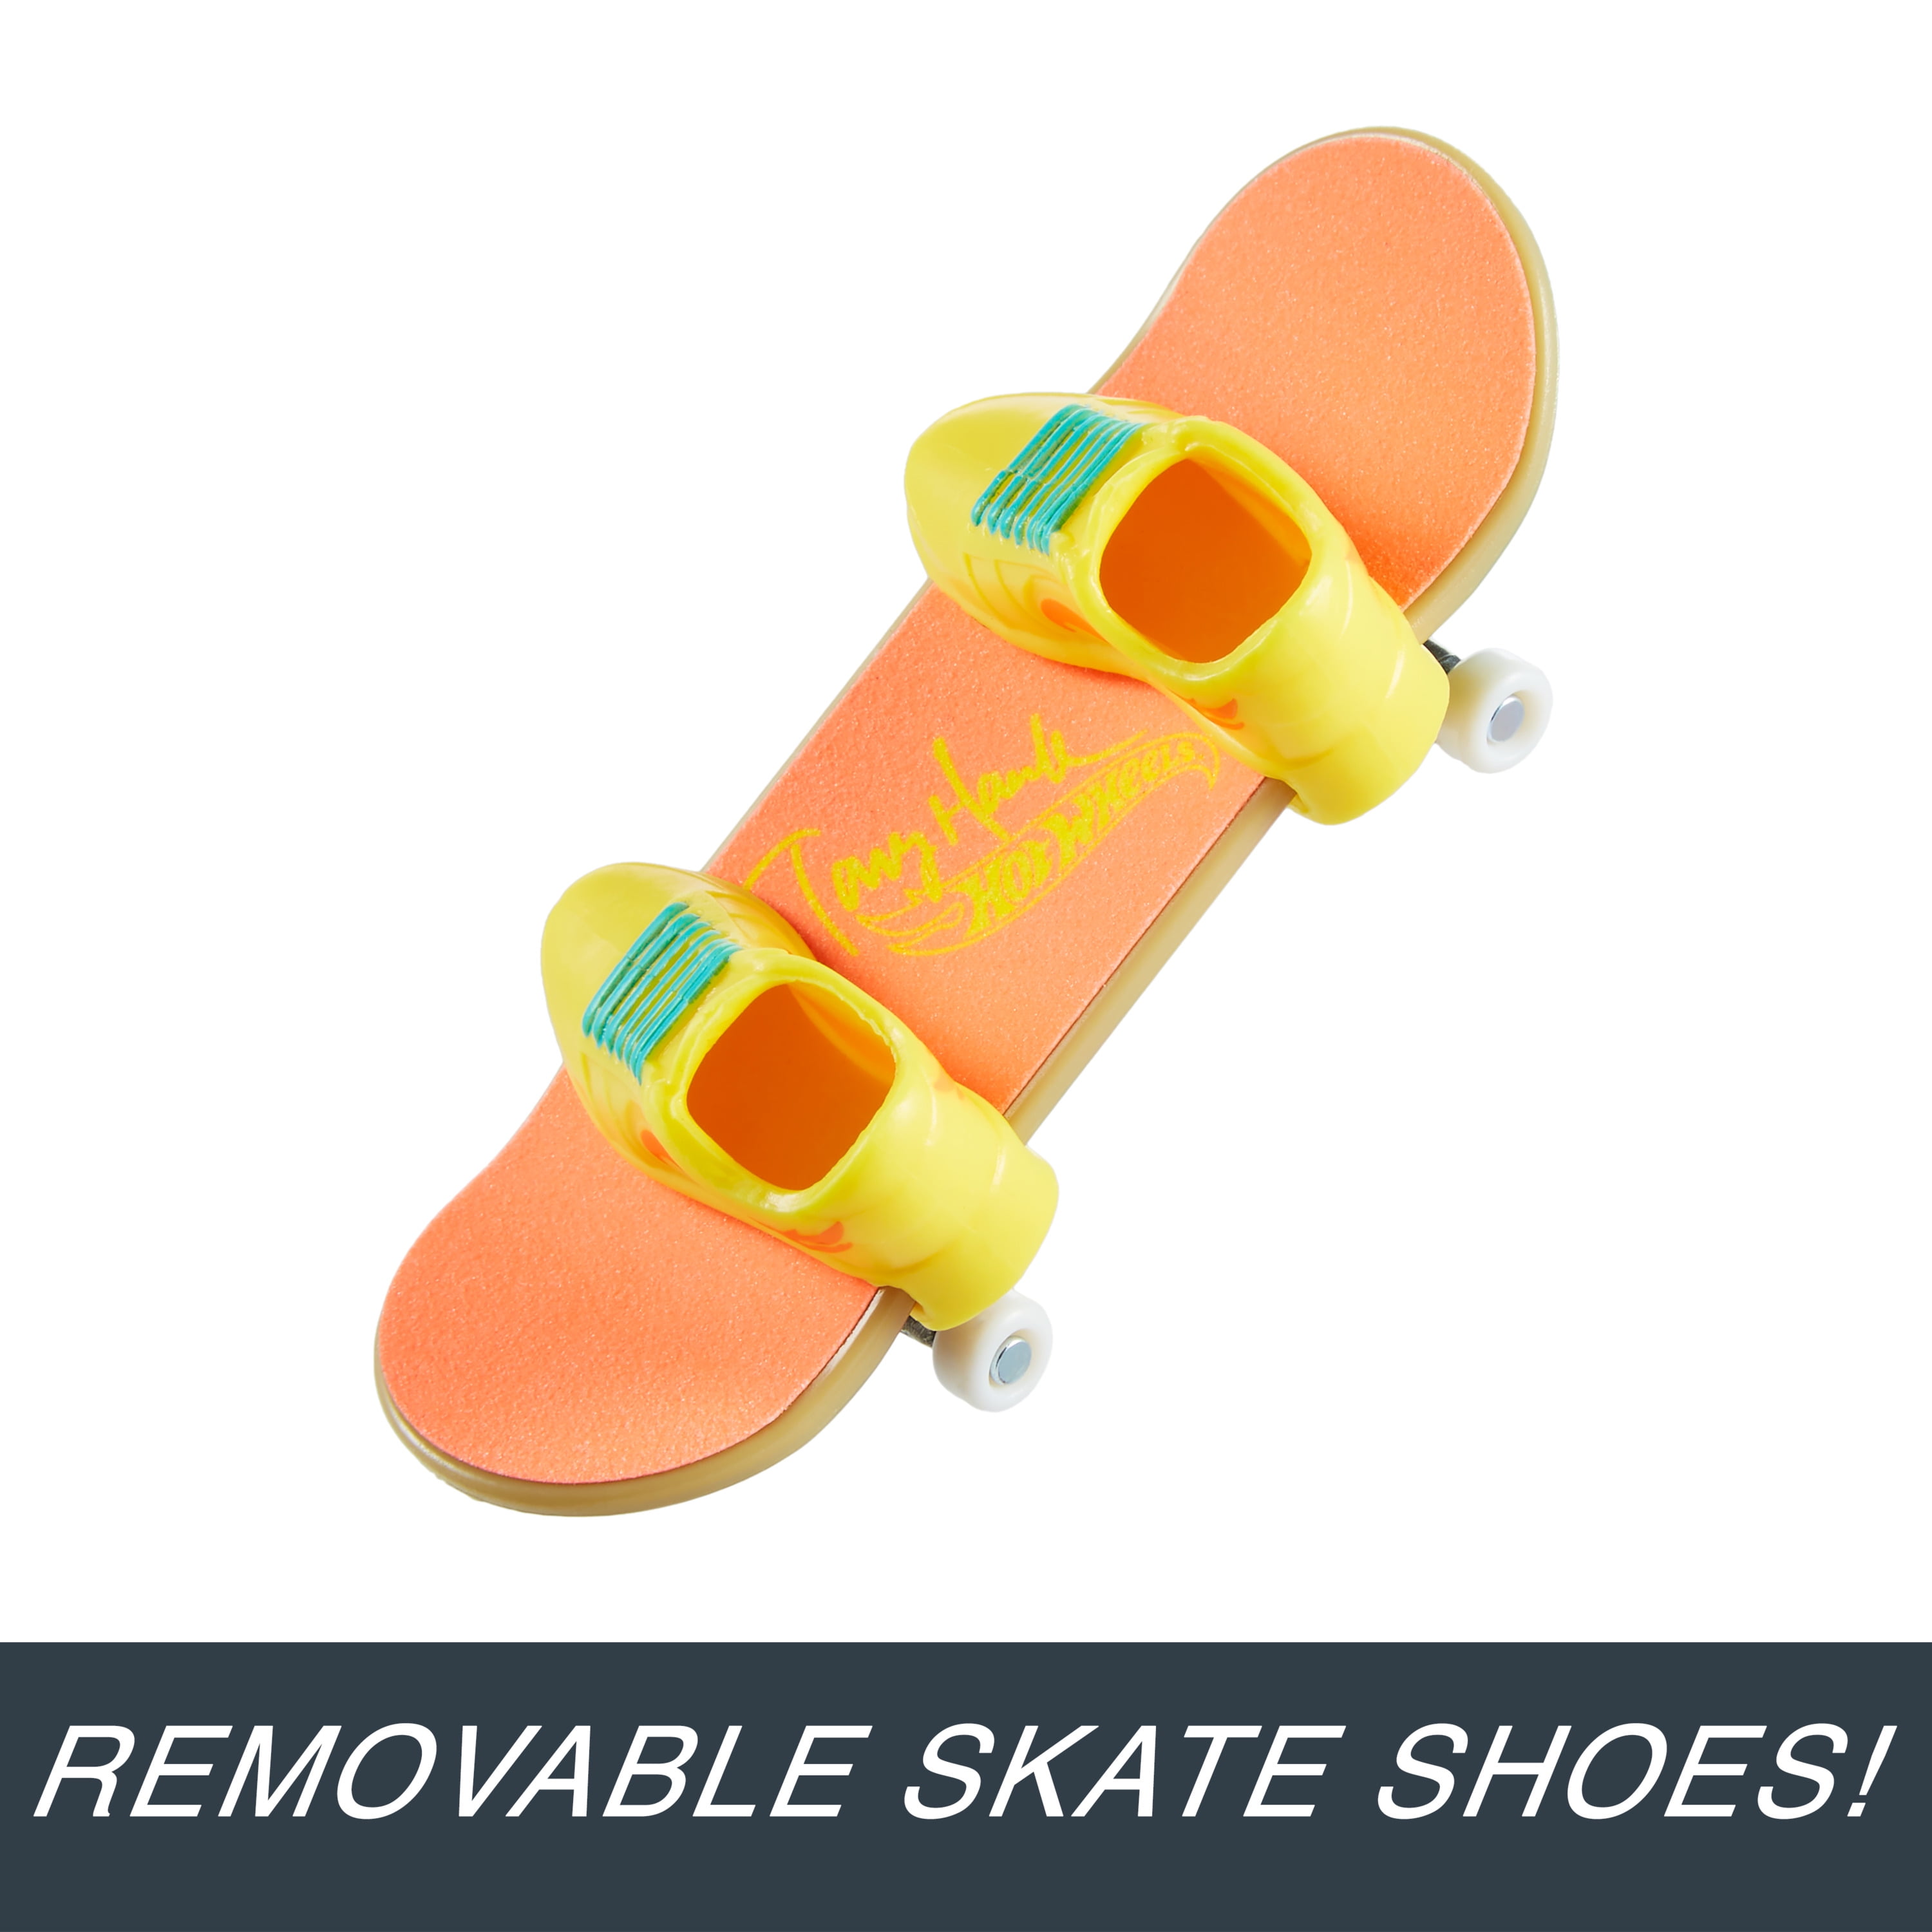 Hot Wheels Skate Dedo Tony Hawk Bright Flight Gnarly Neon 23